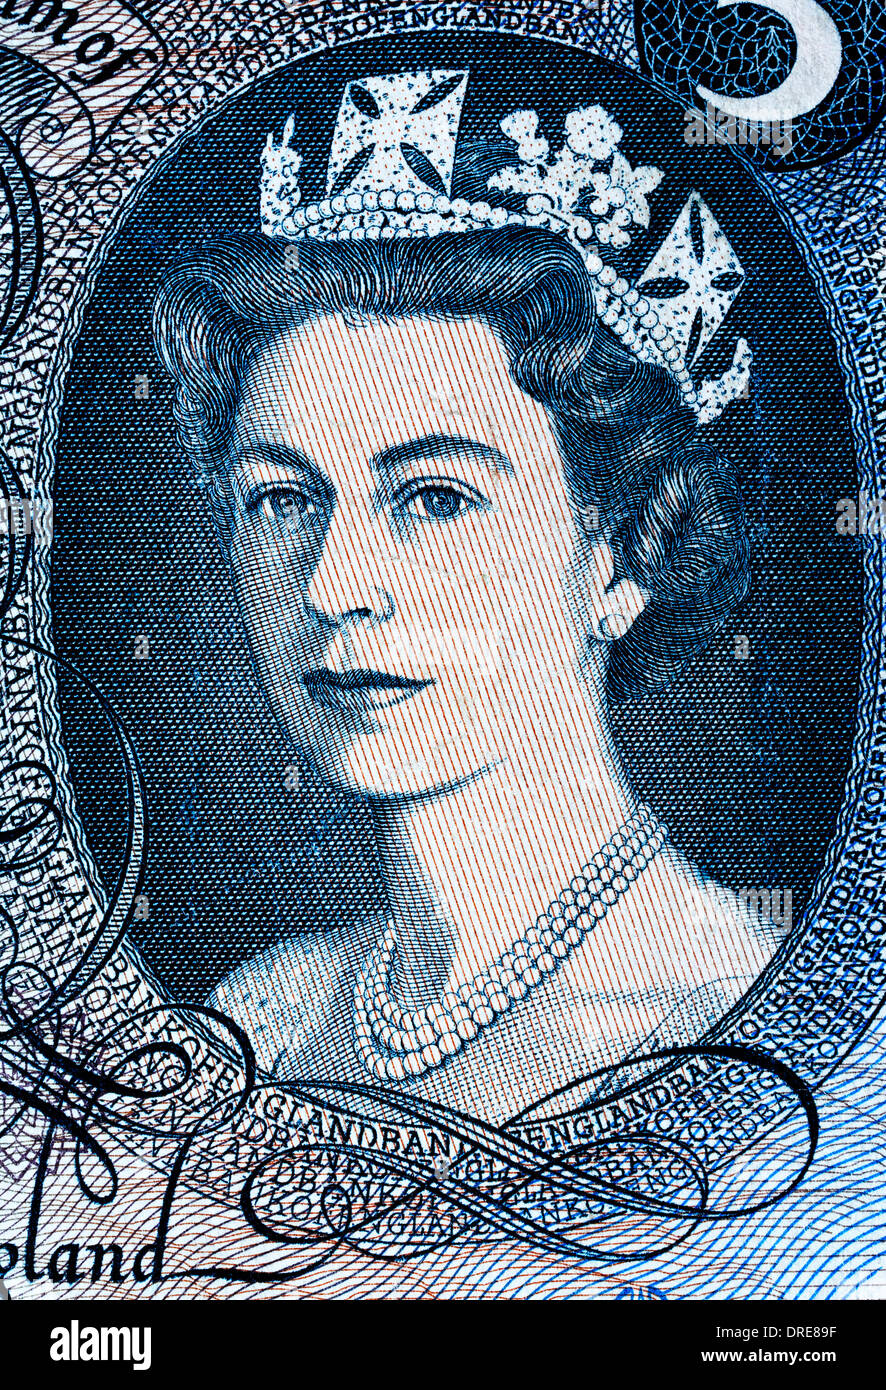 Portrait of Queen Elizabeth II from 5 Pounds banknote, UK, 1963 Stock Photo